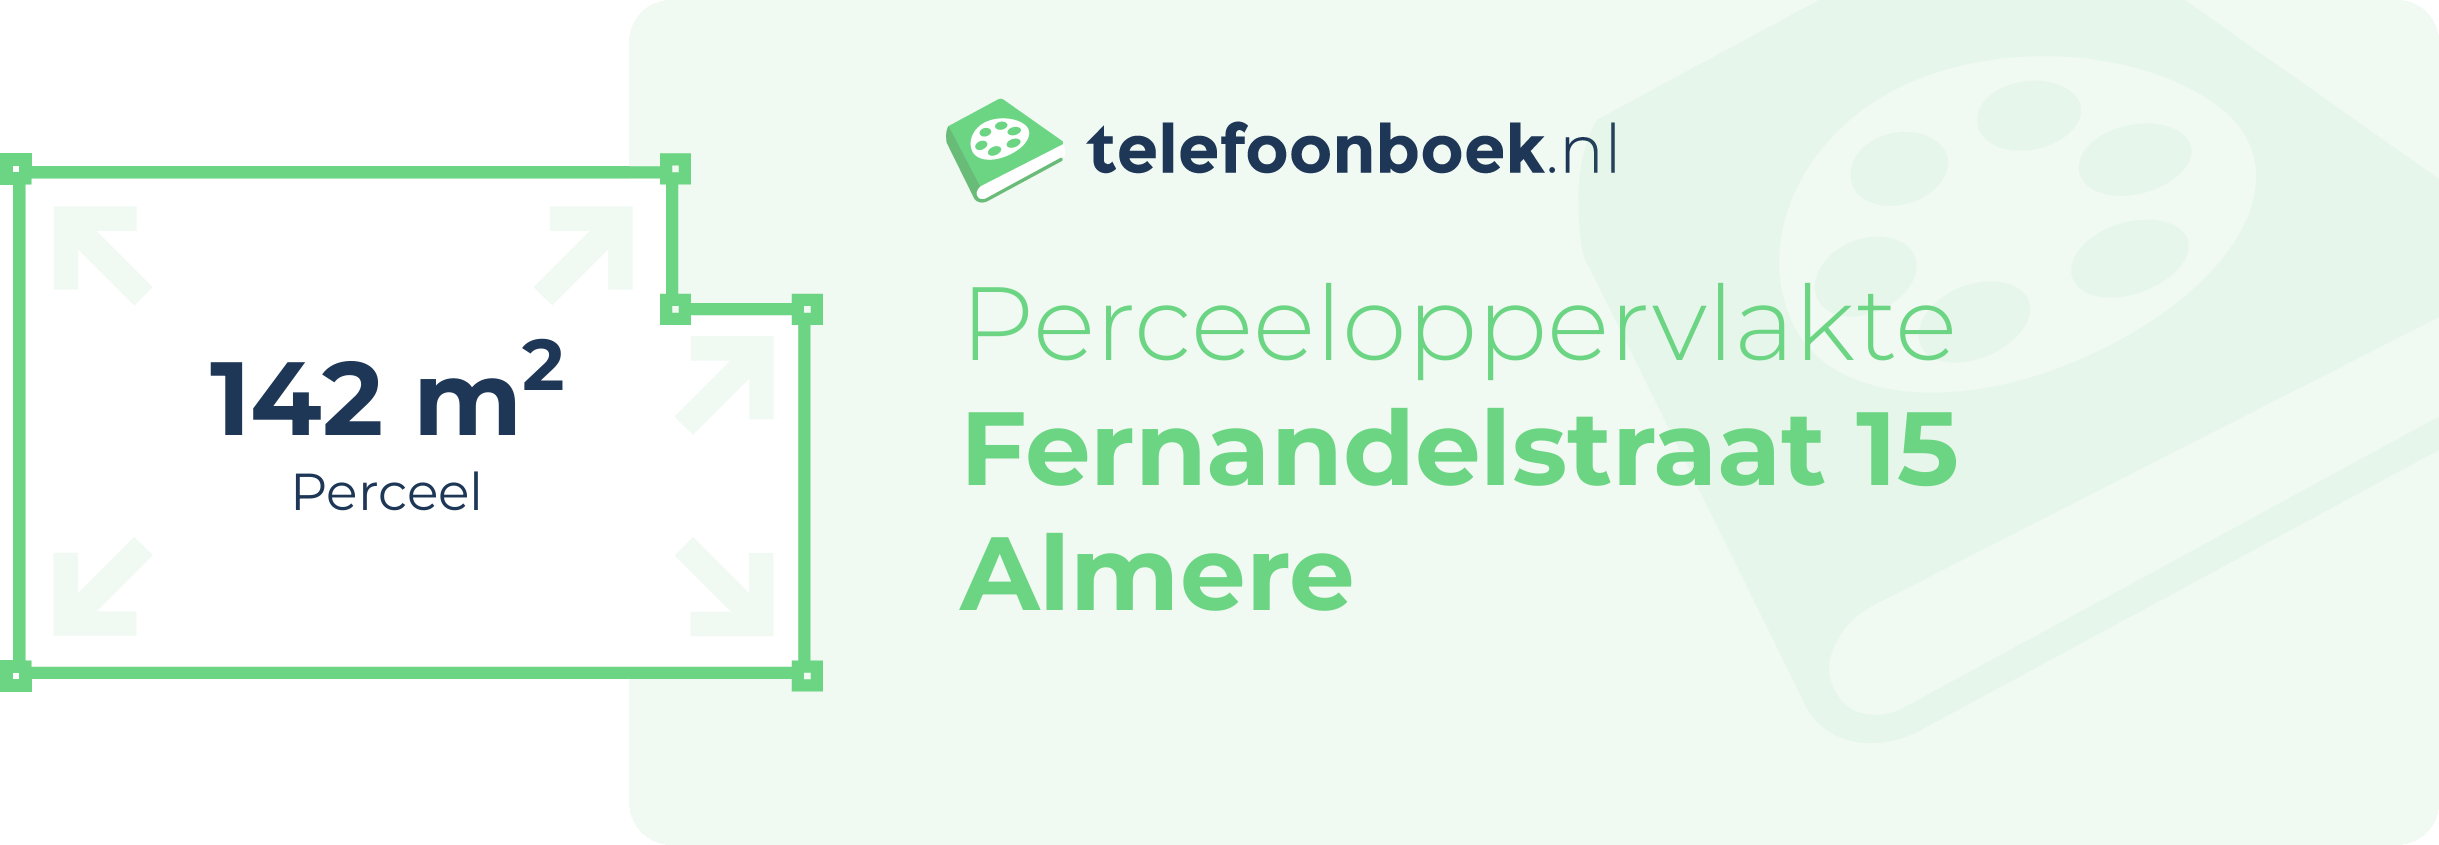 Perceeloppervlakte Fernandelstraat 15 Almere